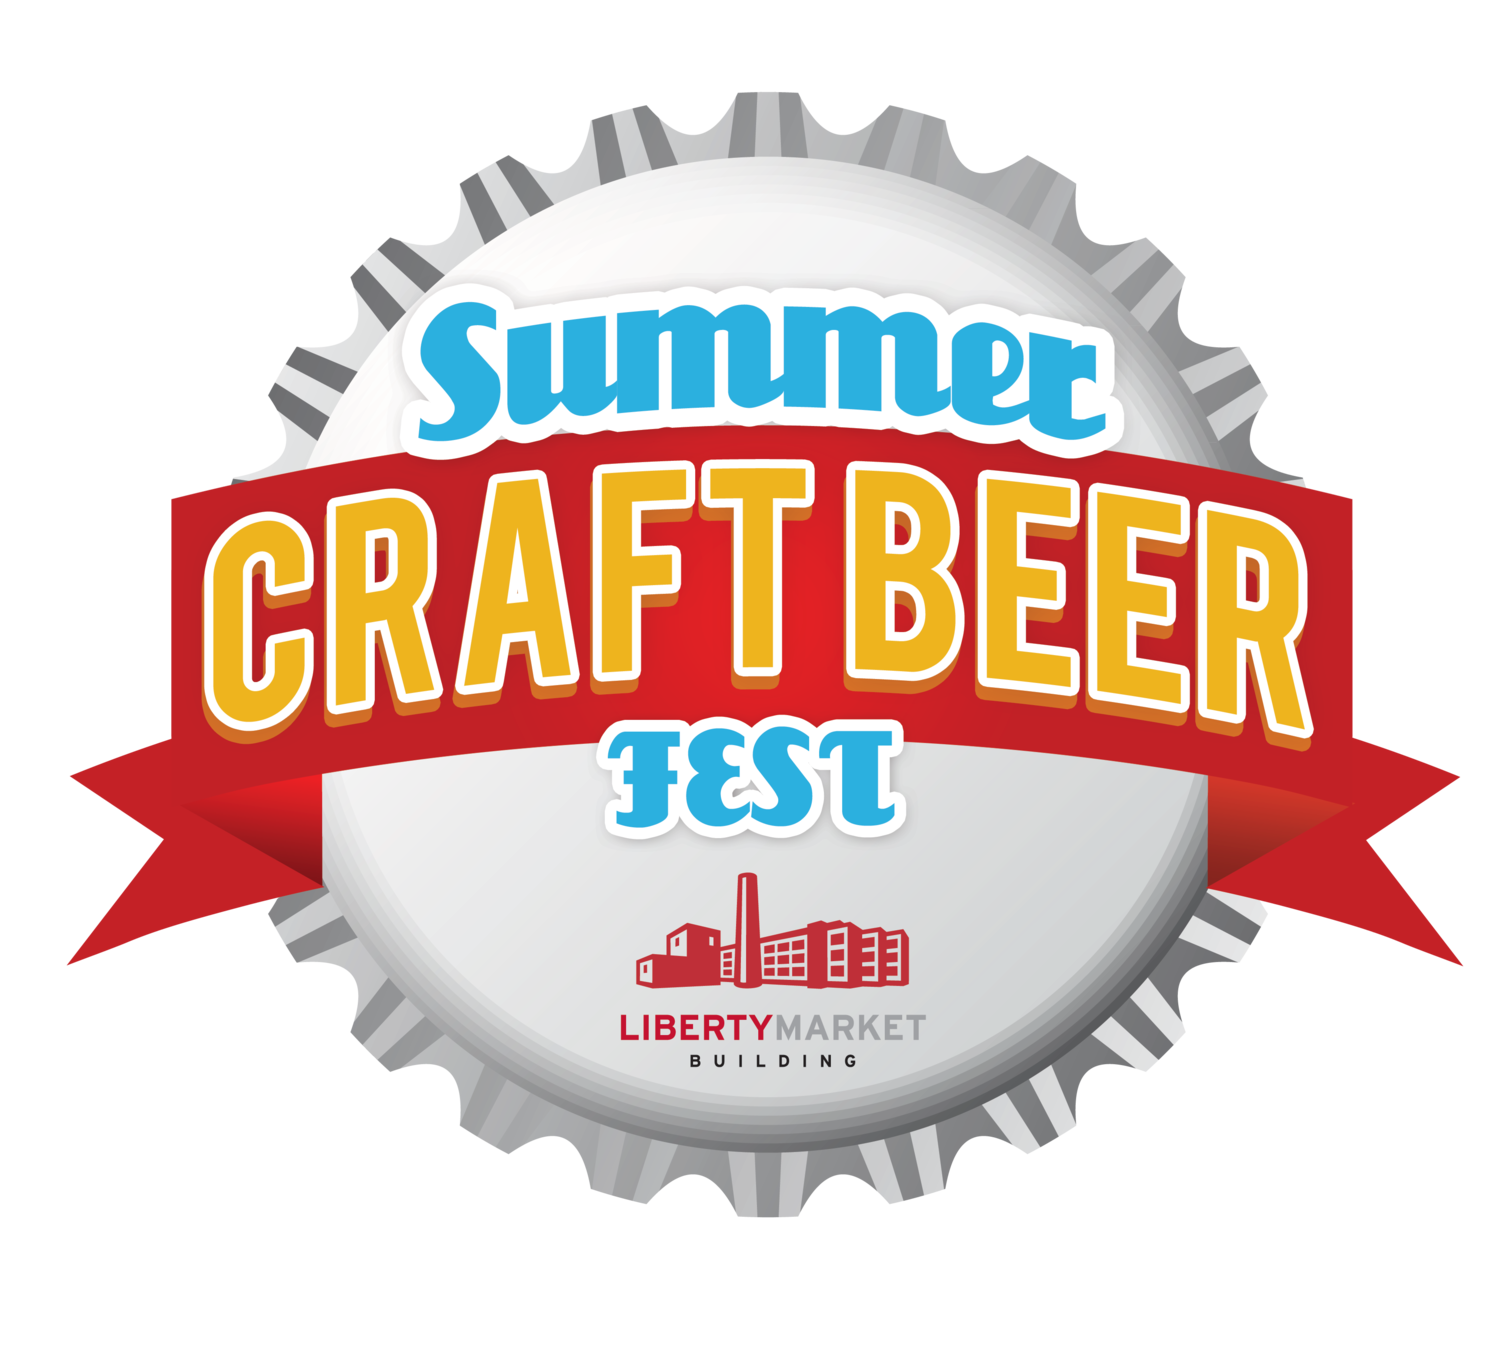 Craft-Beer-Festival-Giveaway-1